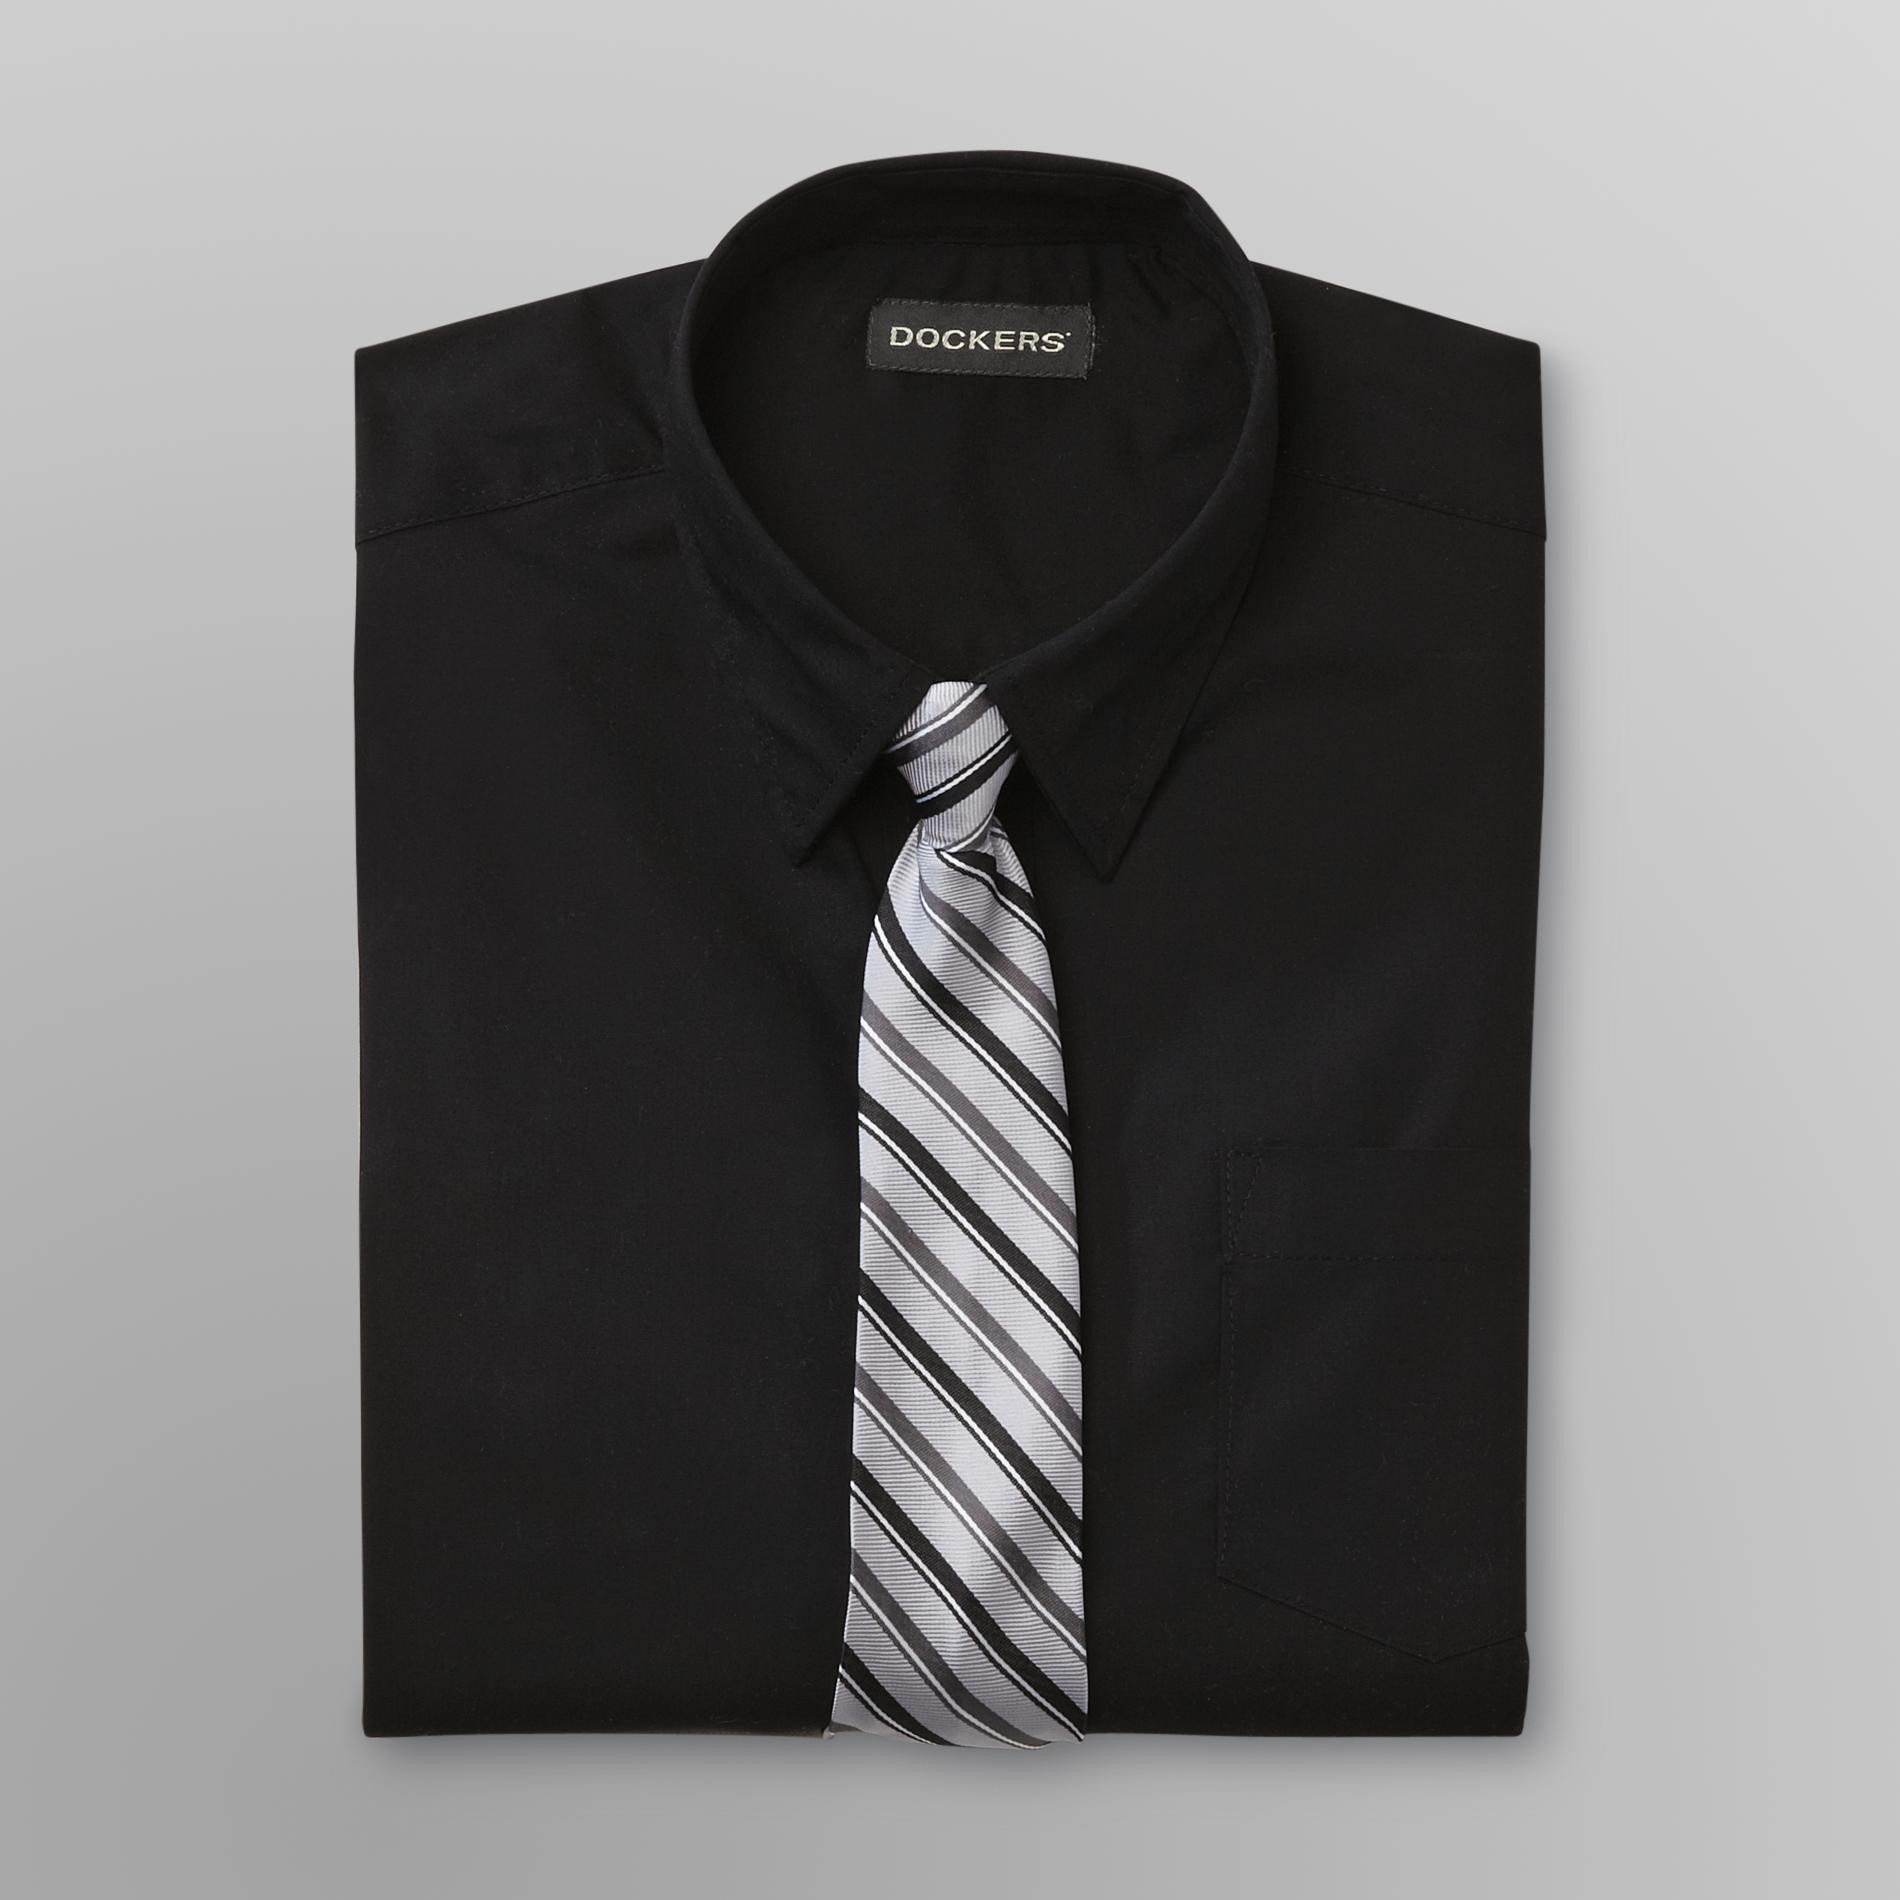 Dockers Boy's Dress Shirt & Windowpane Tie